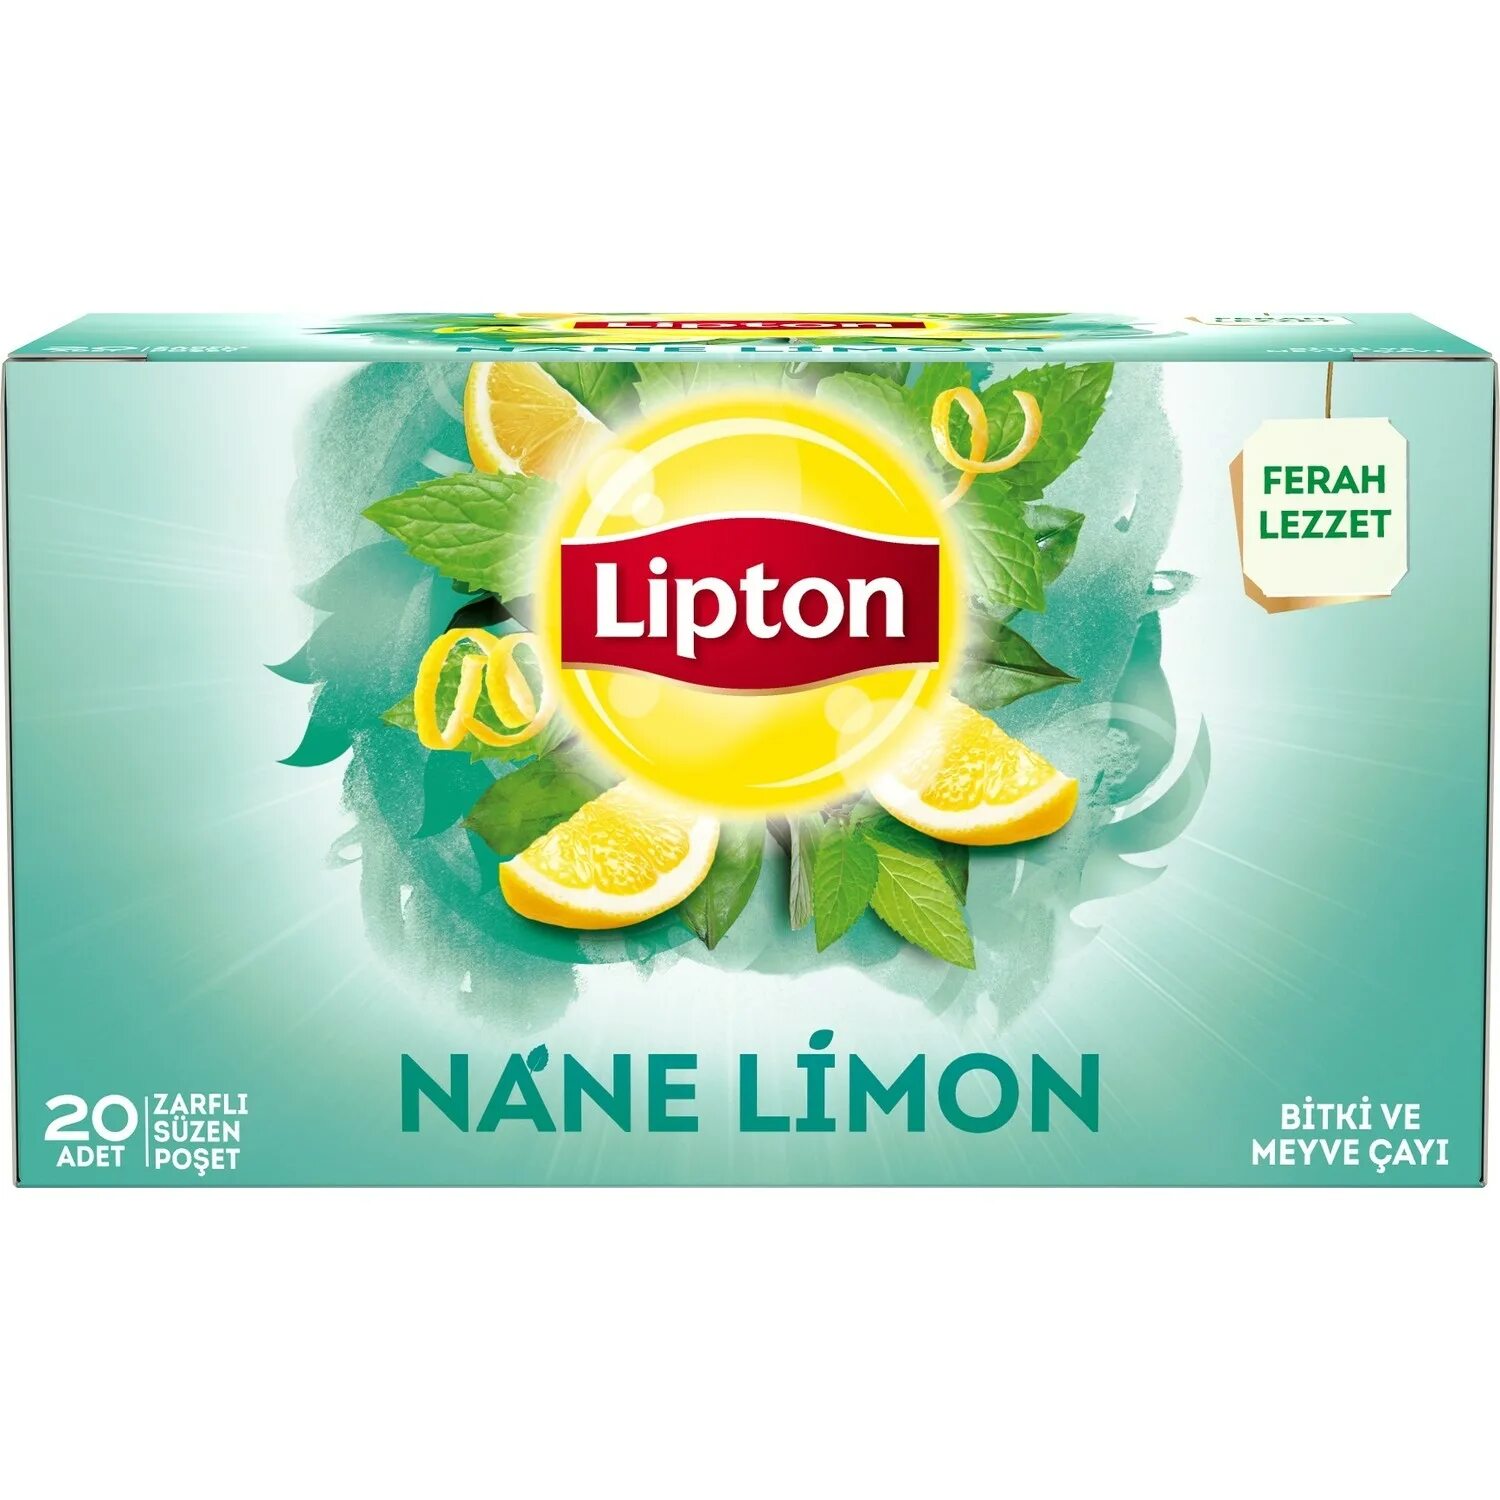 Купить чай лимон. Чай Липтон лимонный. Nane Limon чай. Чай Липтон с мятой. Чай Липтон клубника мята.